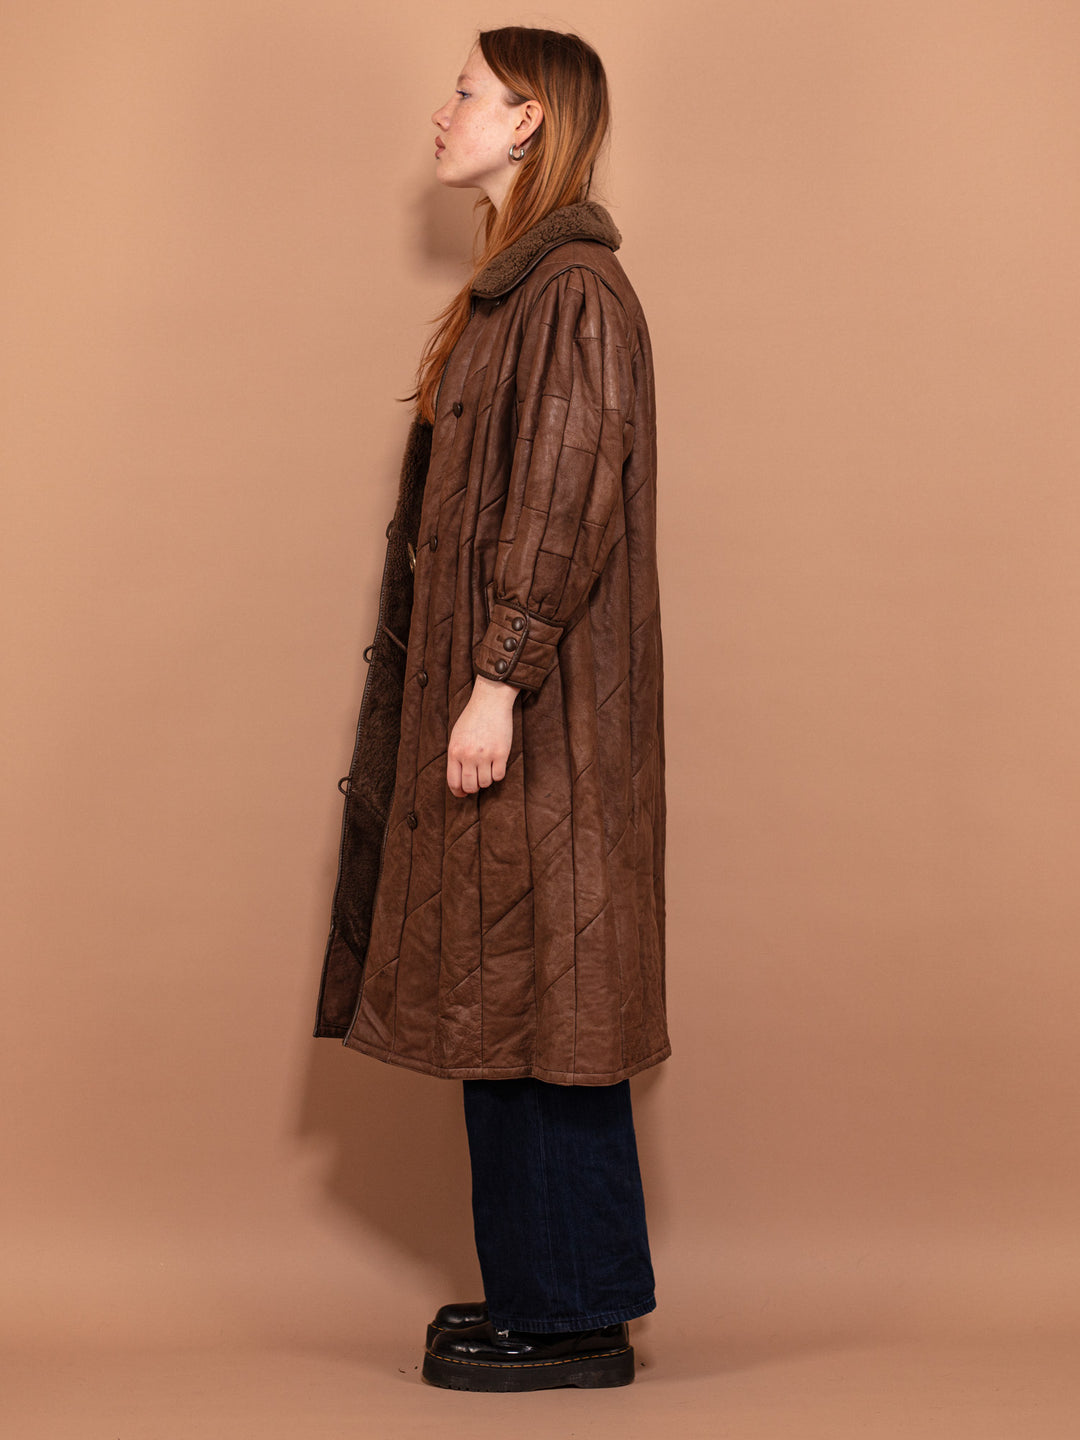 Sheepskin Leather Coat 80's, Size M Vintage Women Soft Leather Winter Coat, Classic Winter Wear, Shearling Wool Trim Boho Coat, 80s Clothing